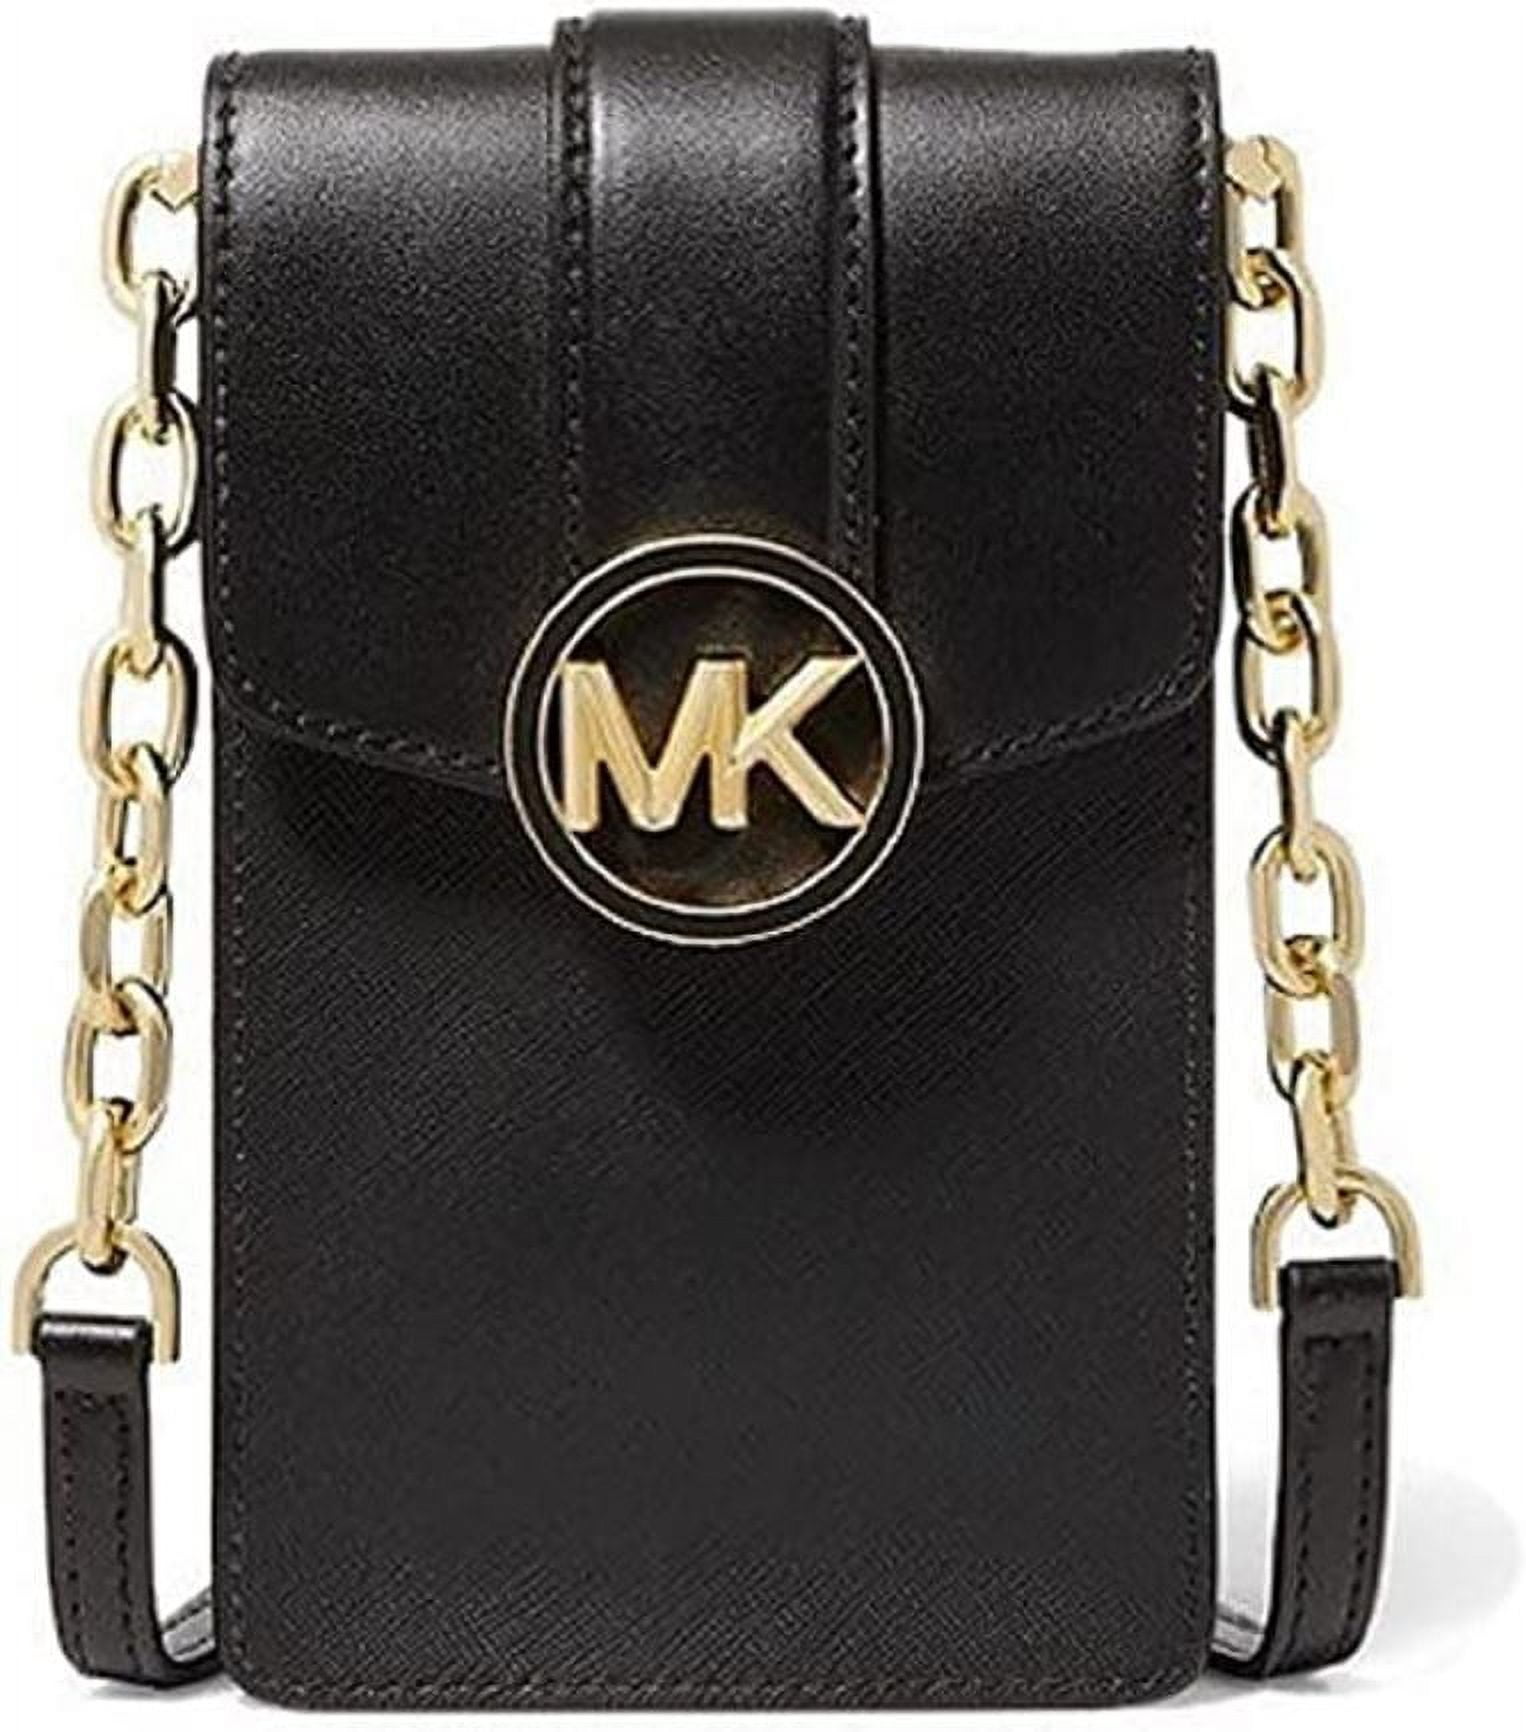 mk phone crossbody bag